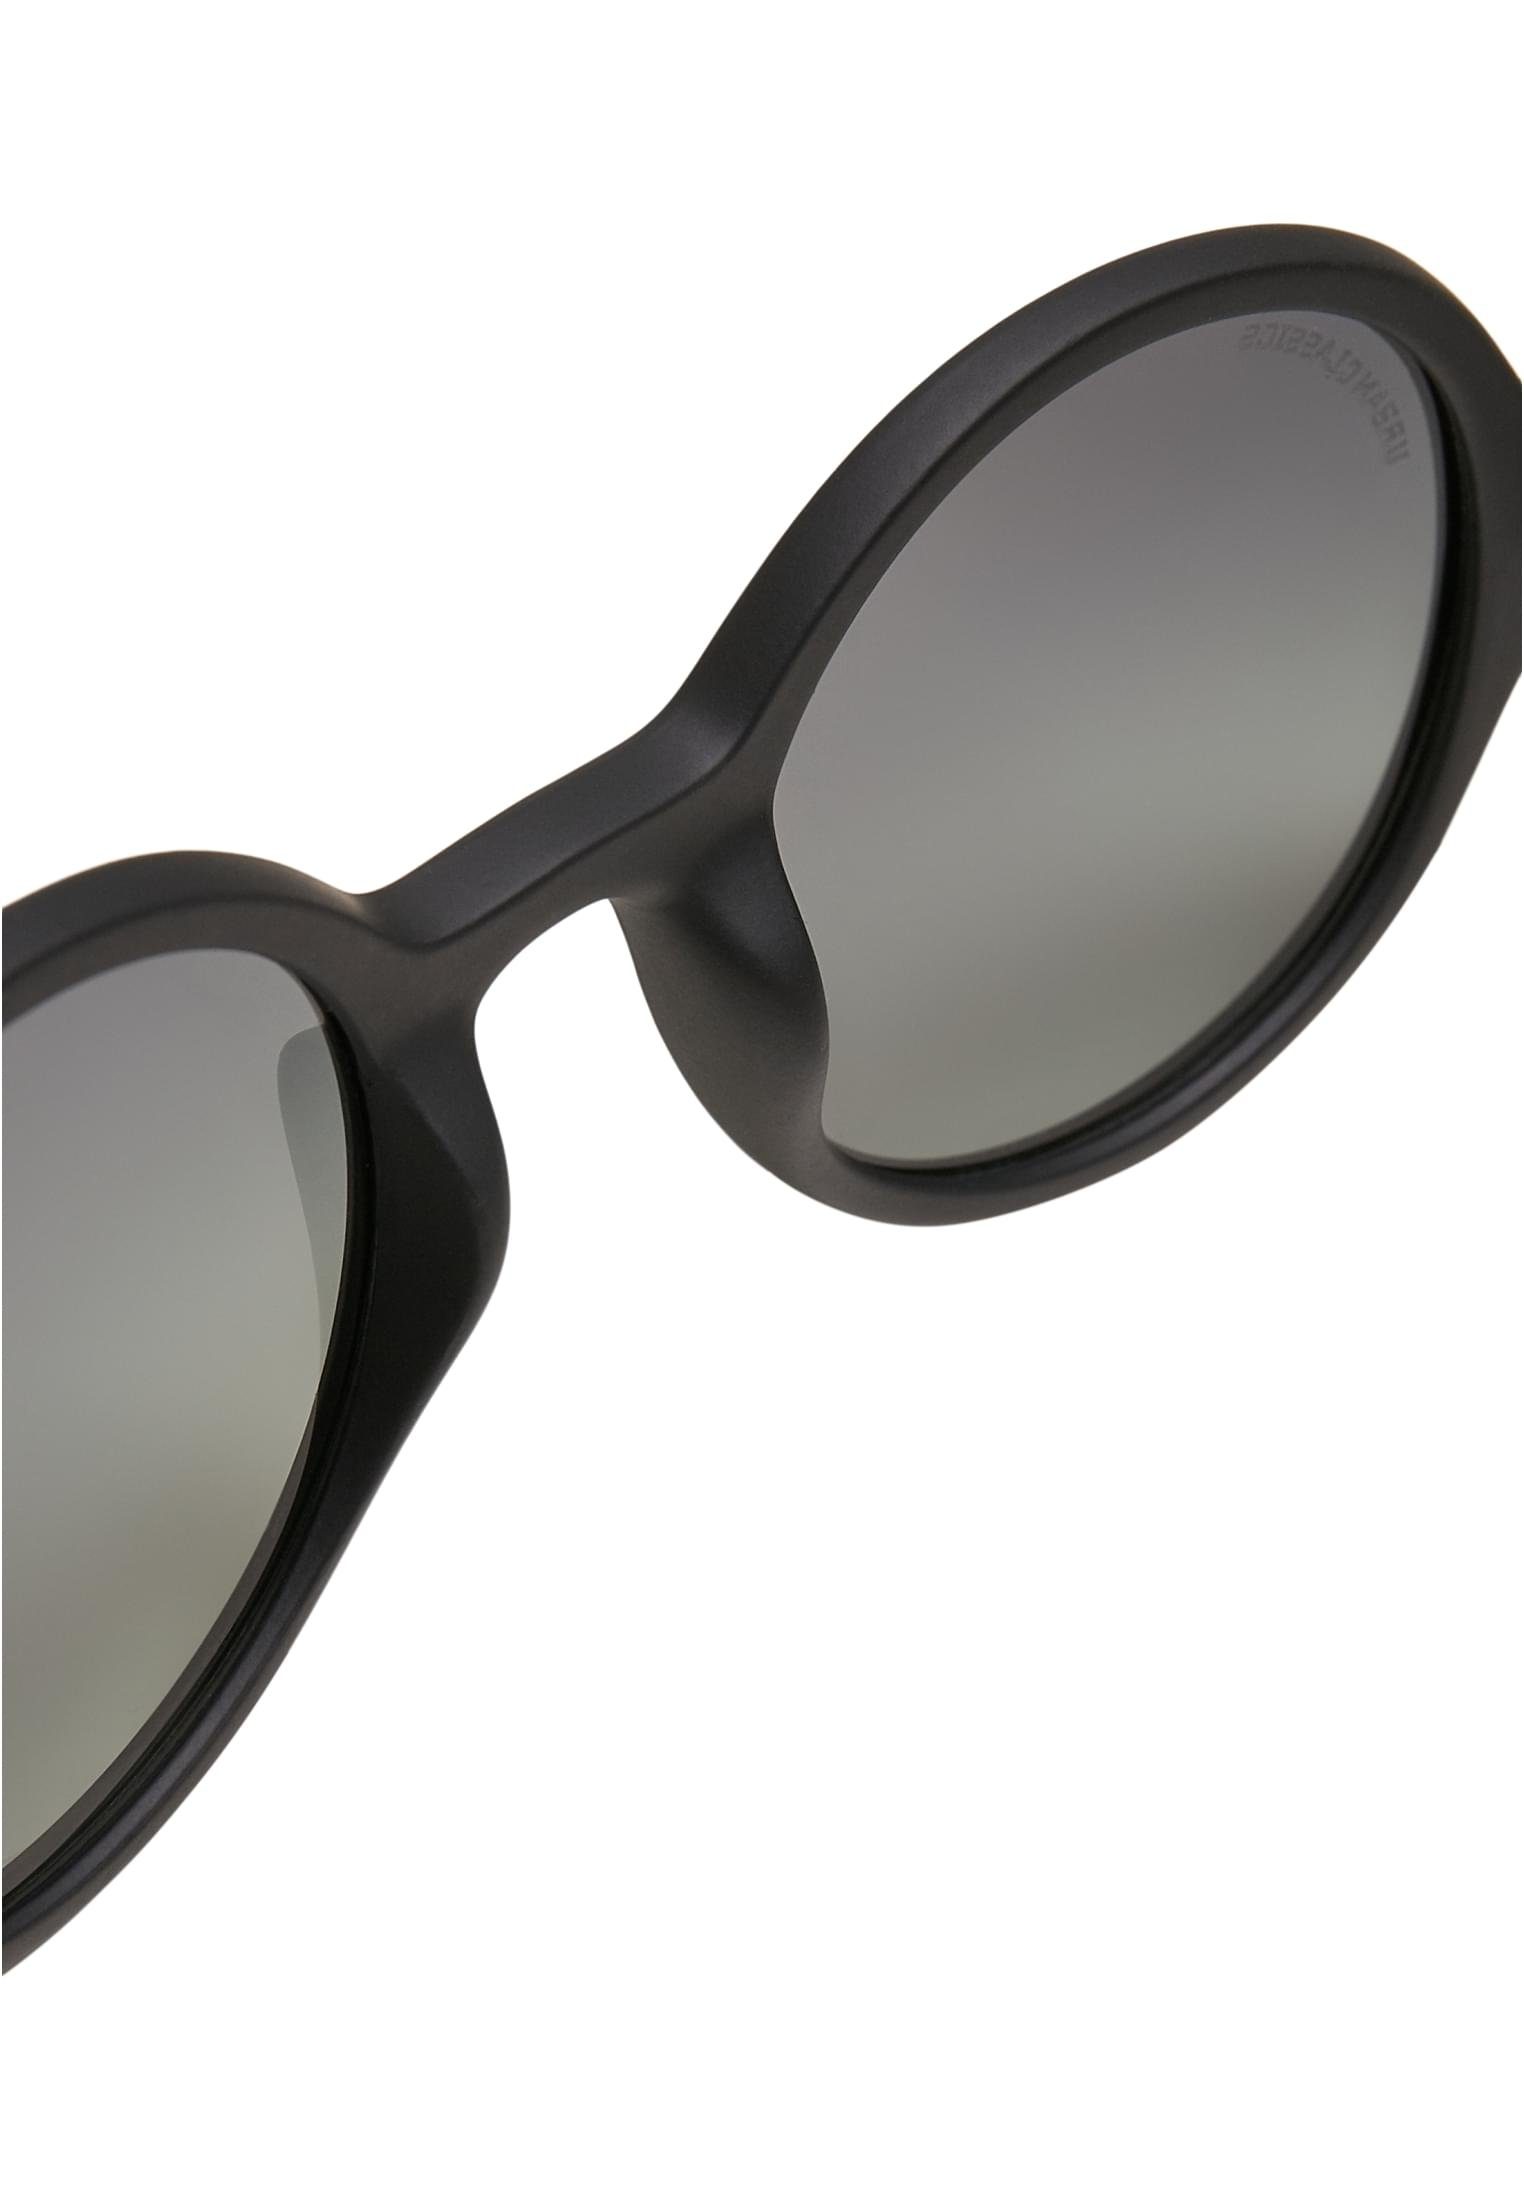 Sonnenbrille Accessoires Retro URBAN black/green UC Sunglasses CLASSICS Funk